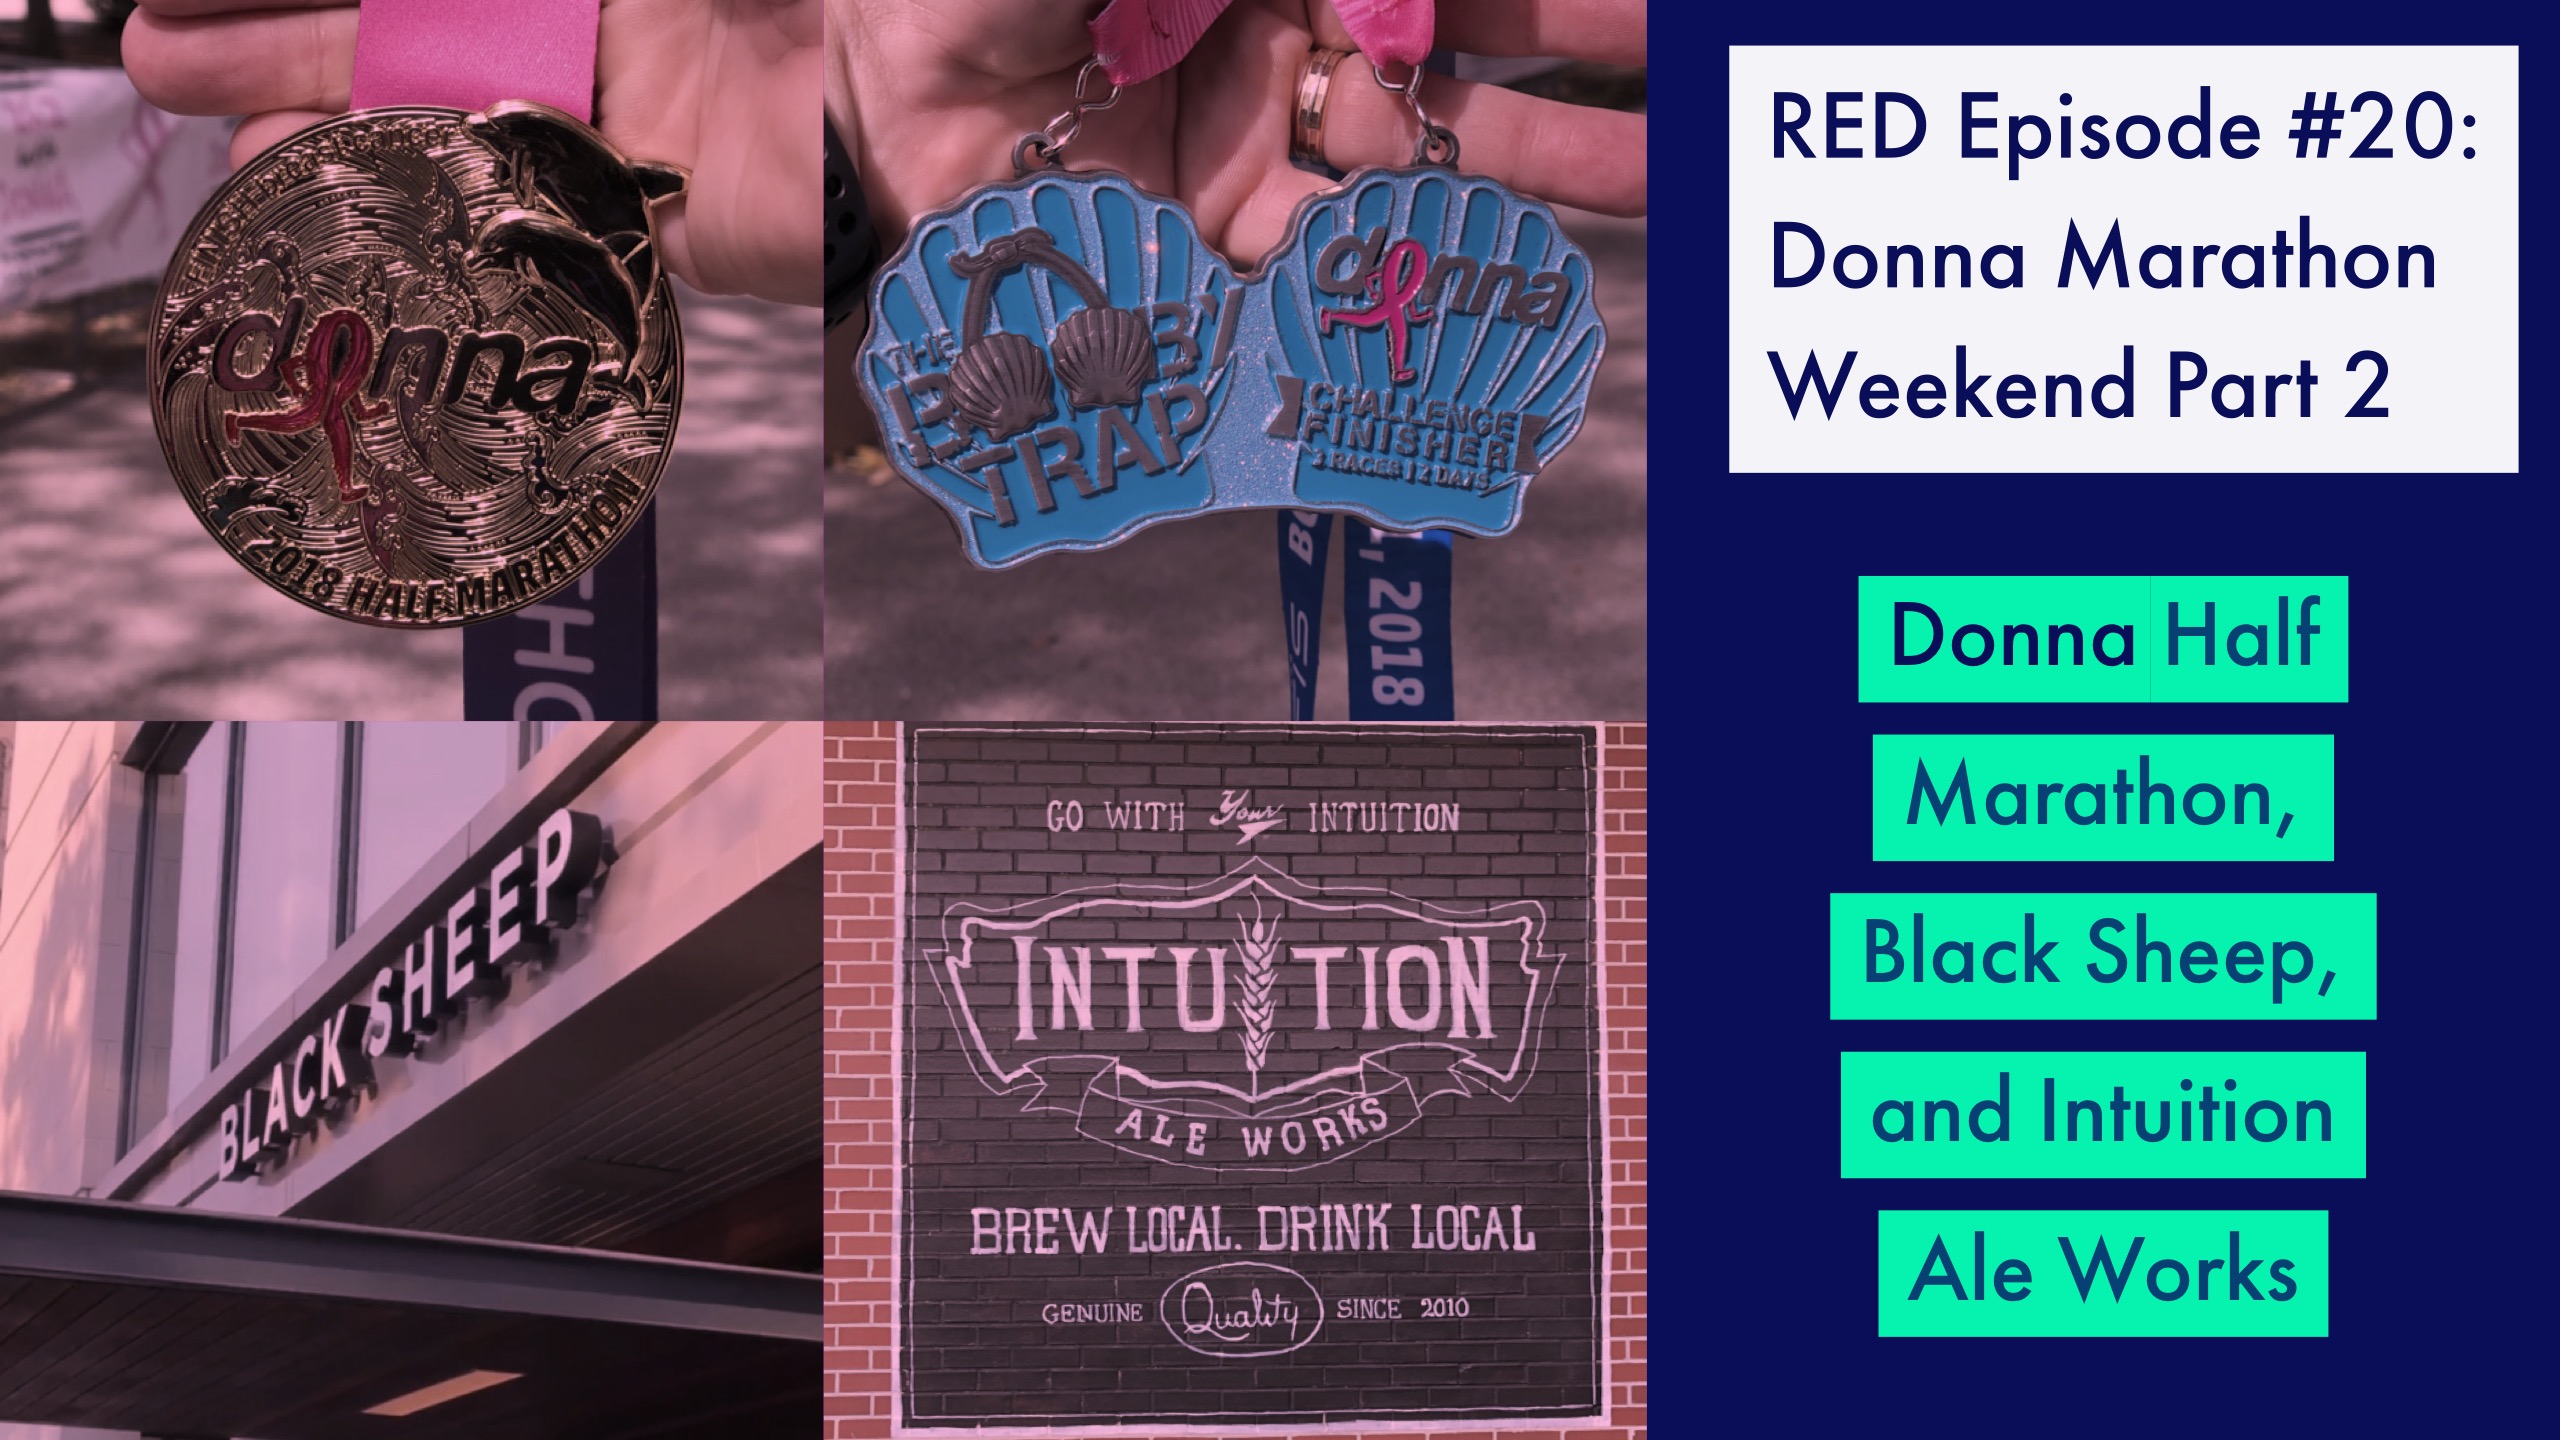 RED Episode #20 Donna Half Marathon, Black Sheep, and Intuition Ale Works in Jacksonville